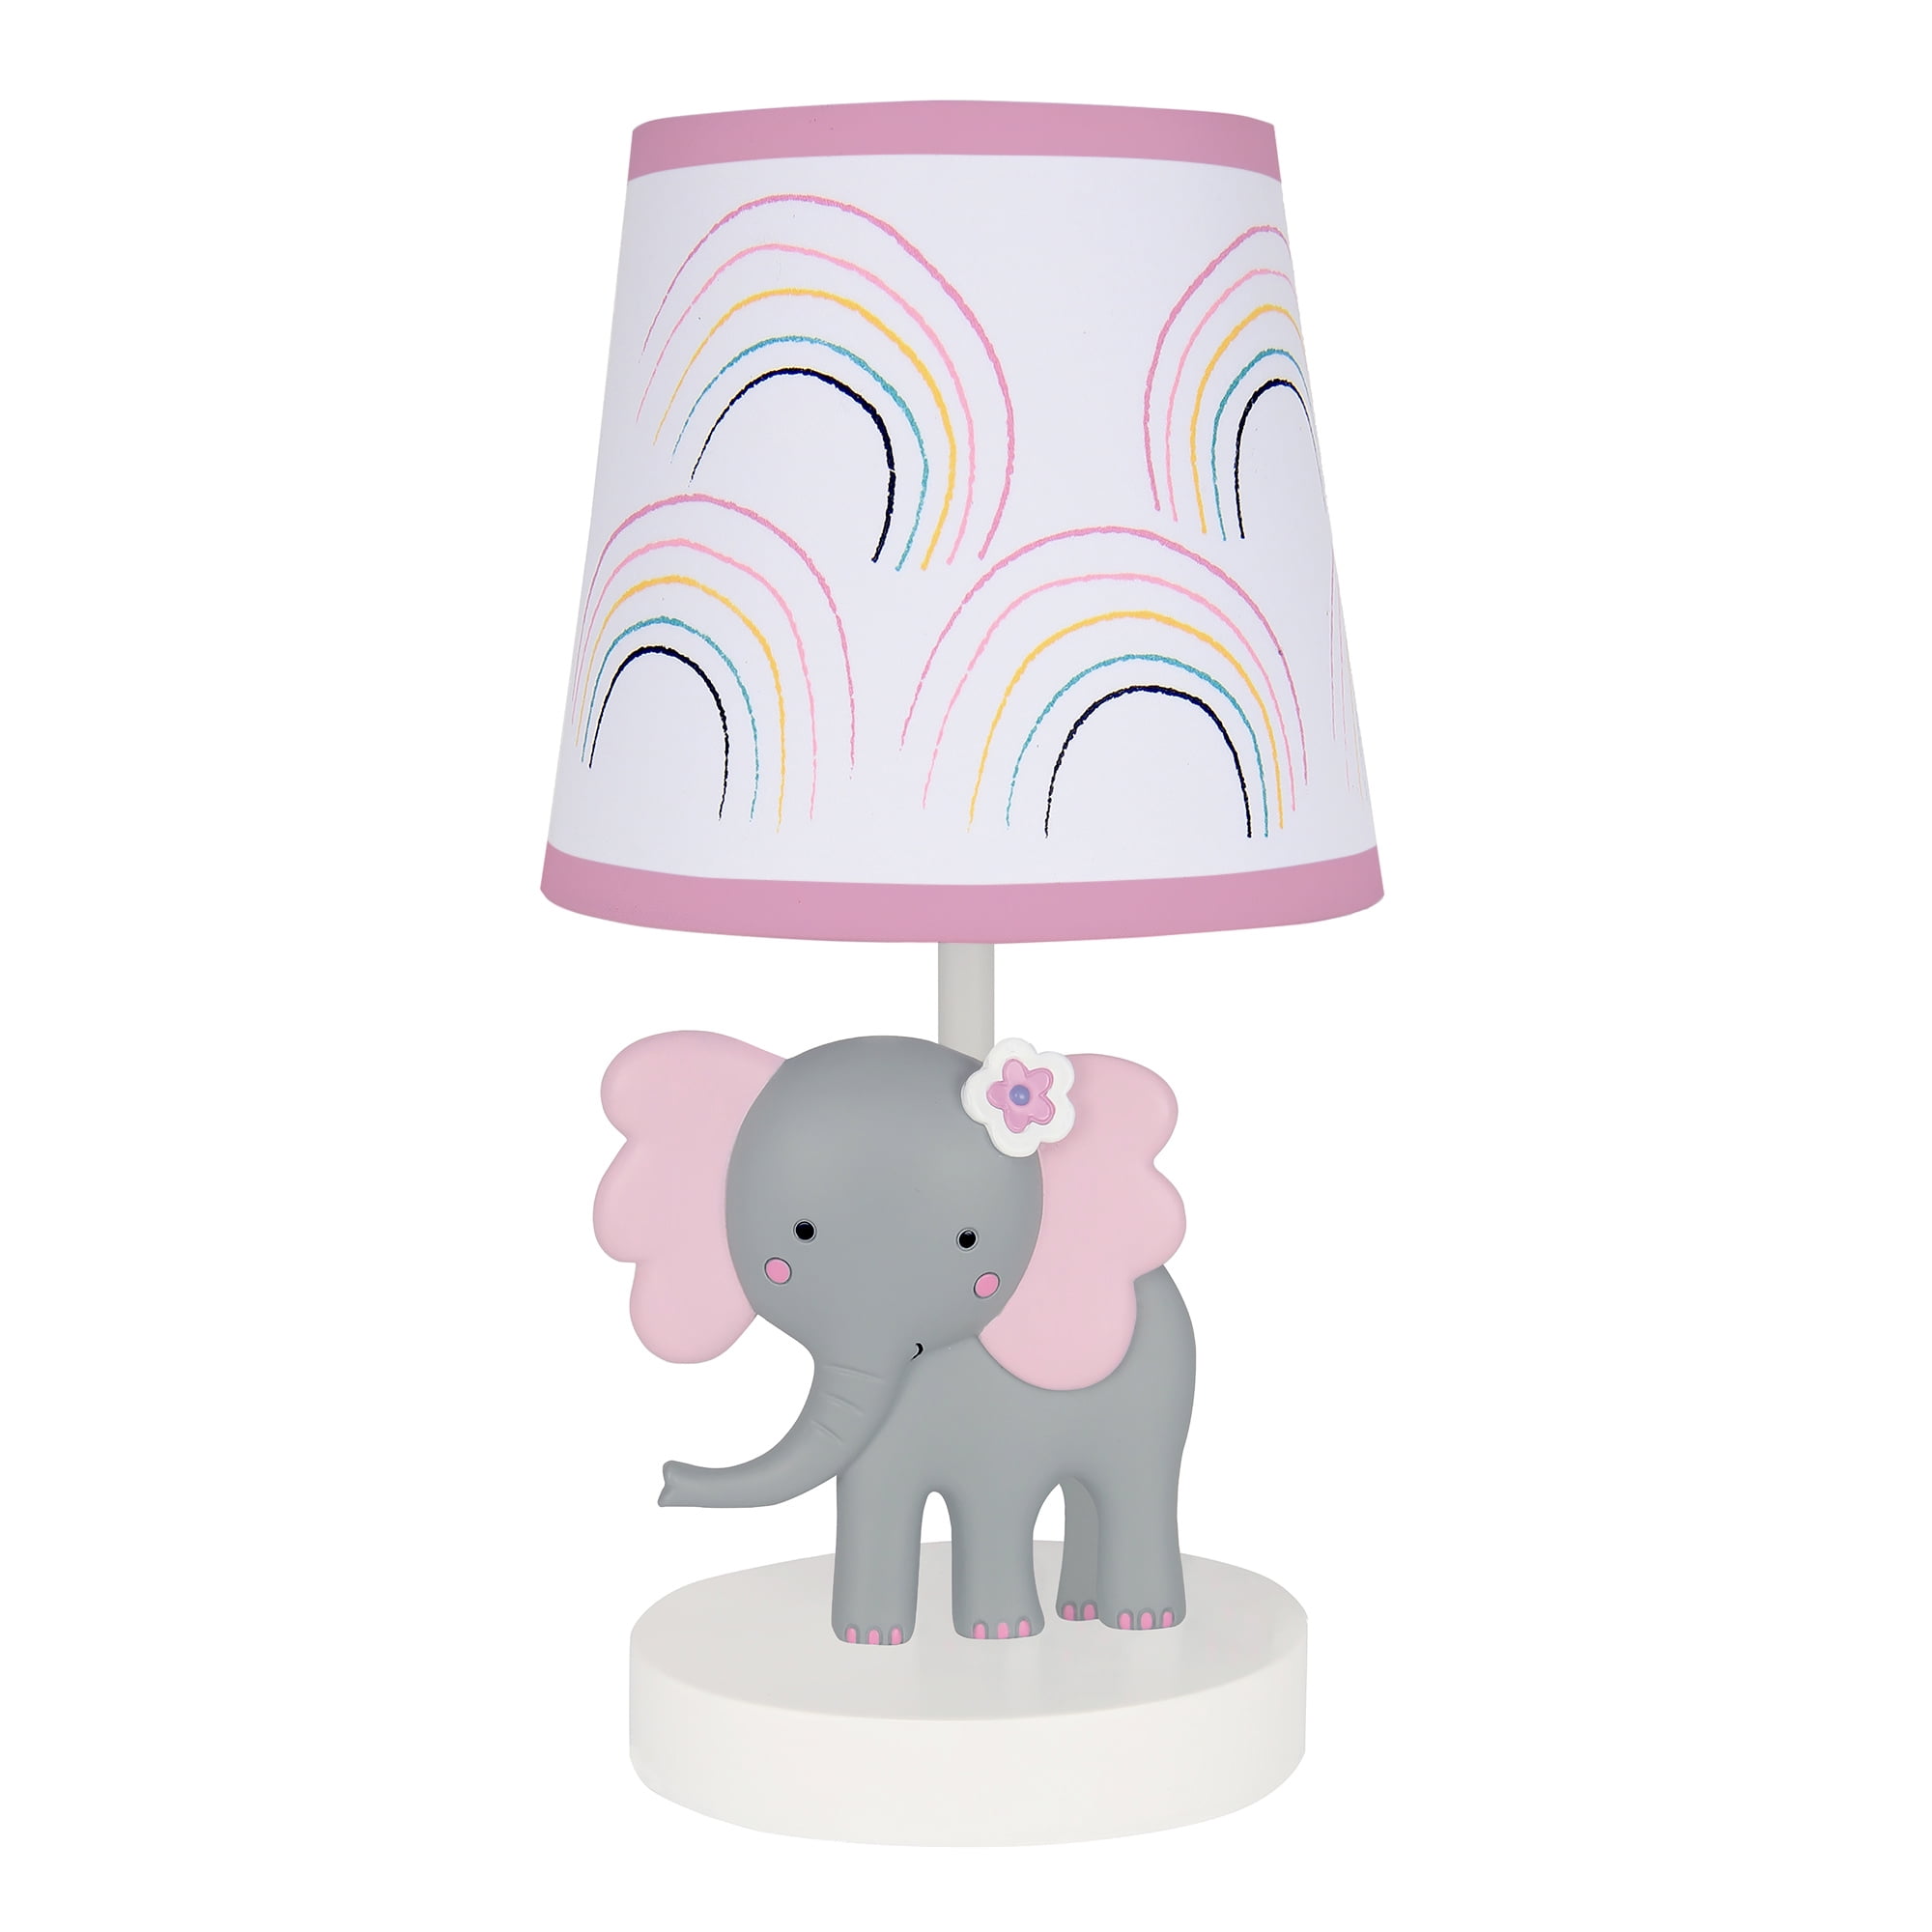 "Kids Elephant Lampshade Decor Bedroom Baby Nursery For Ceiling Light Shade Lamp 